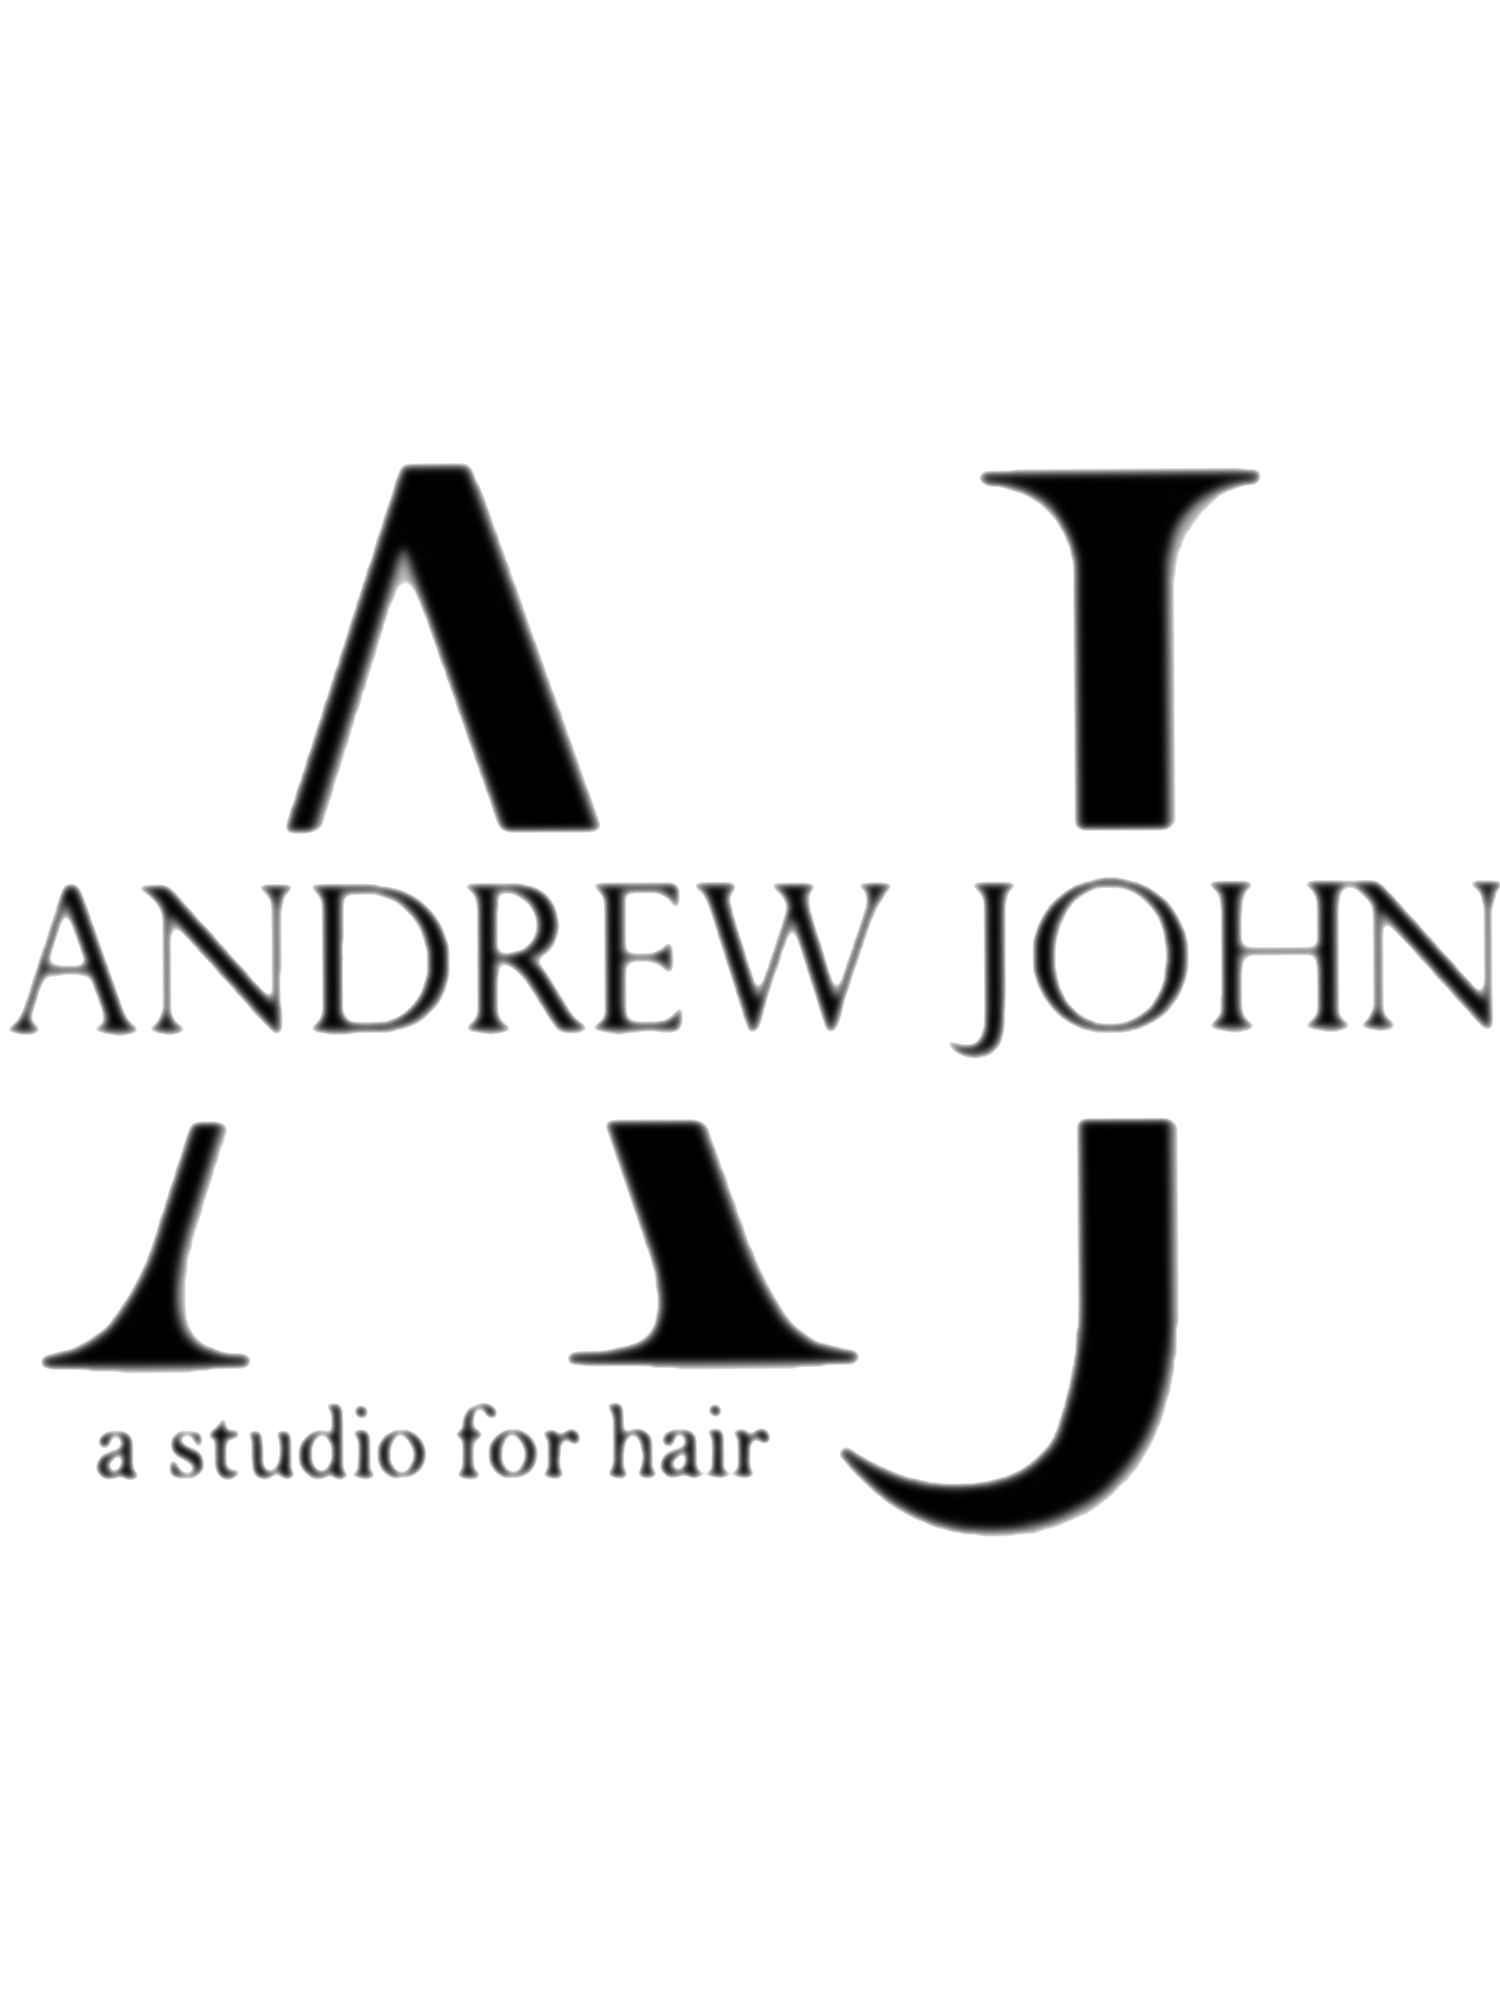 Andrew John Salon